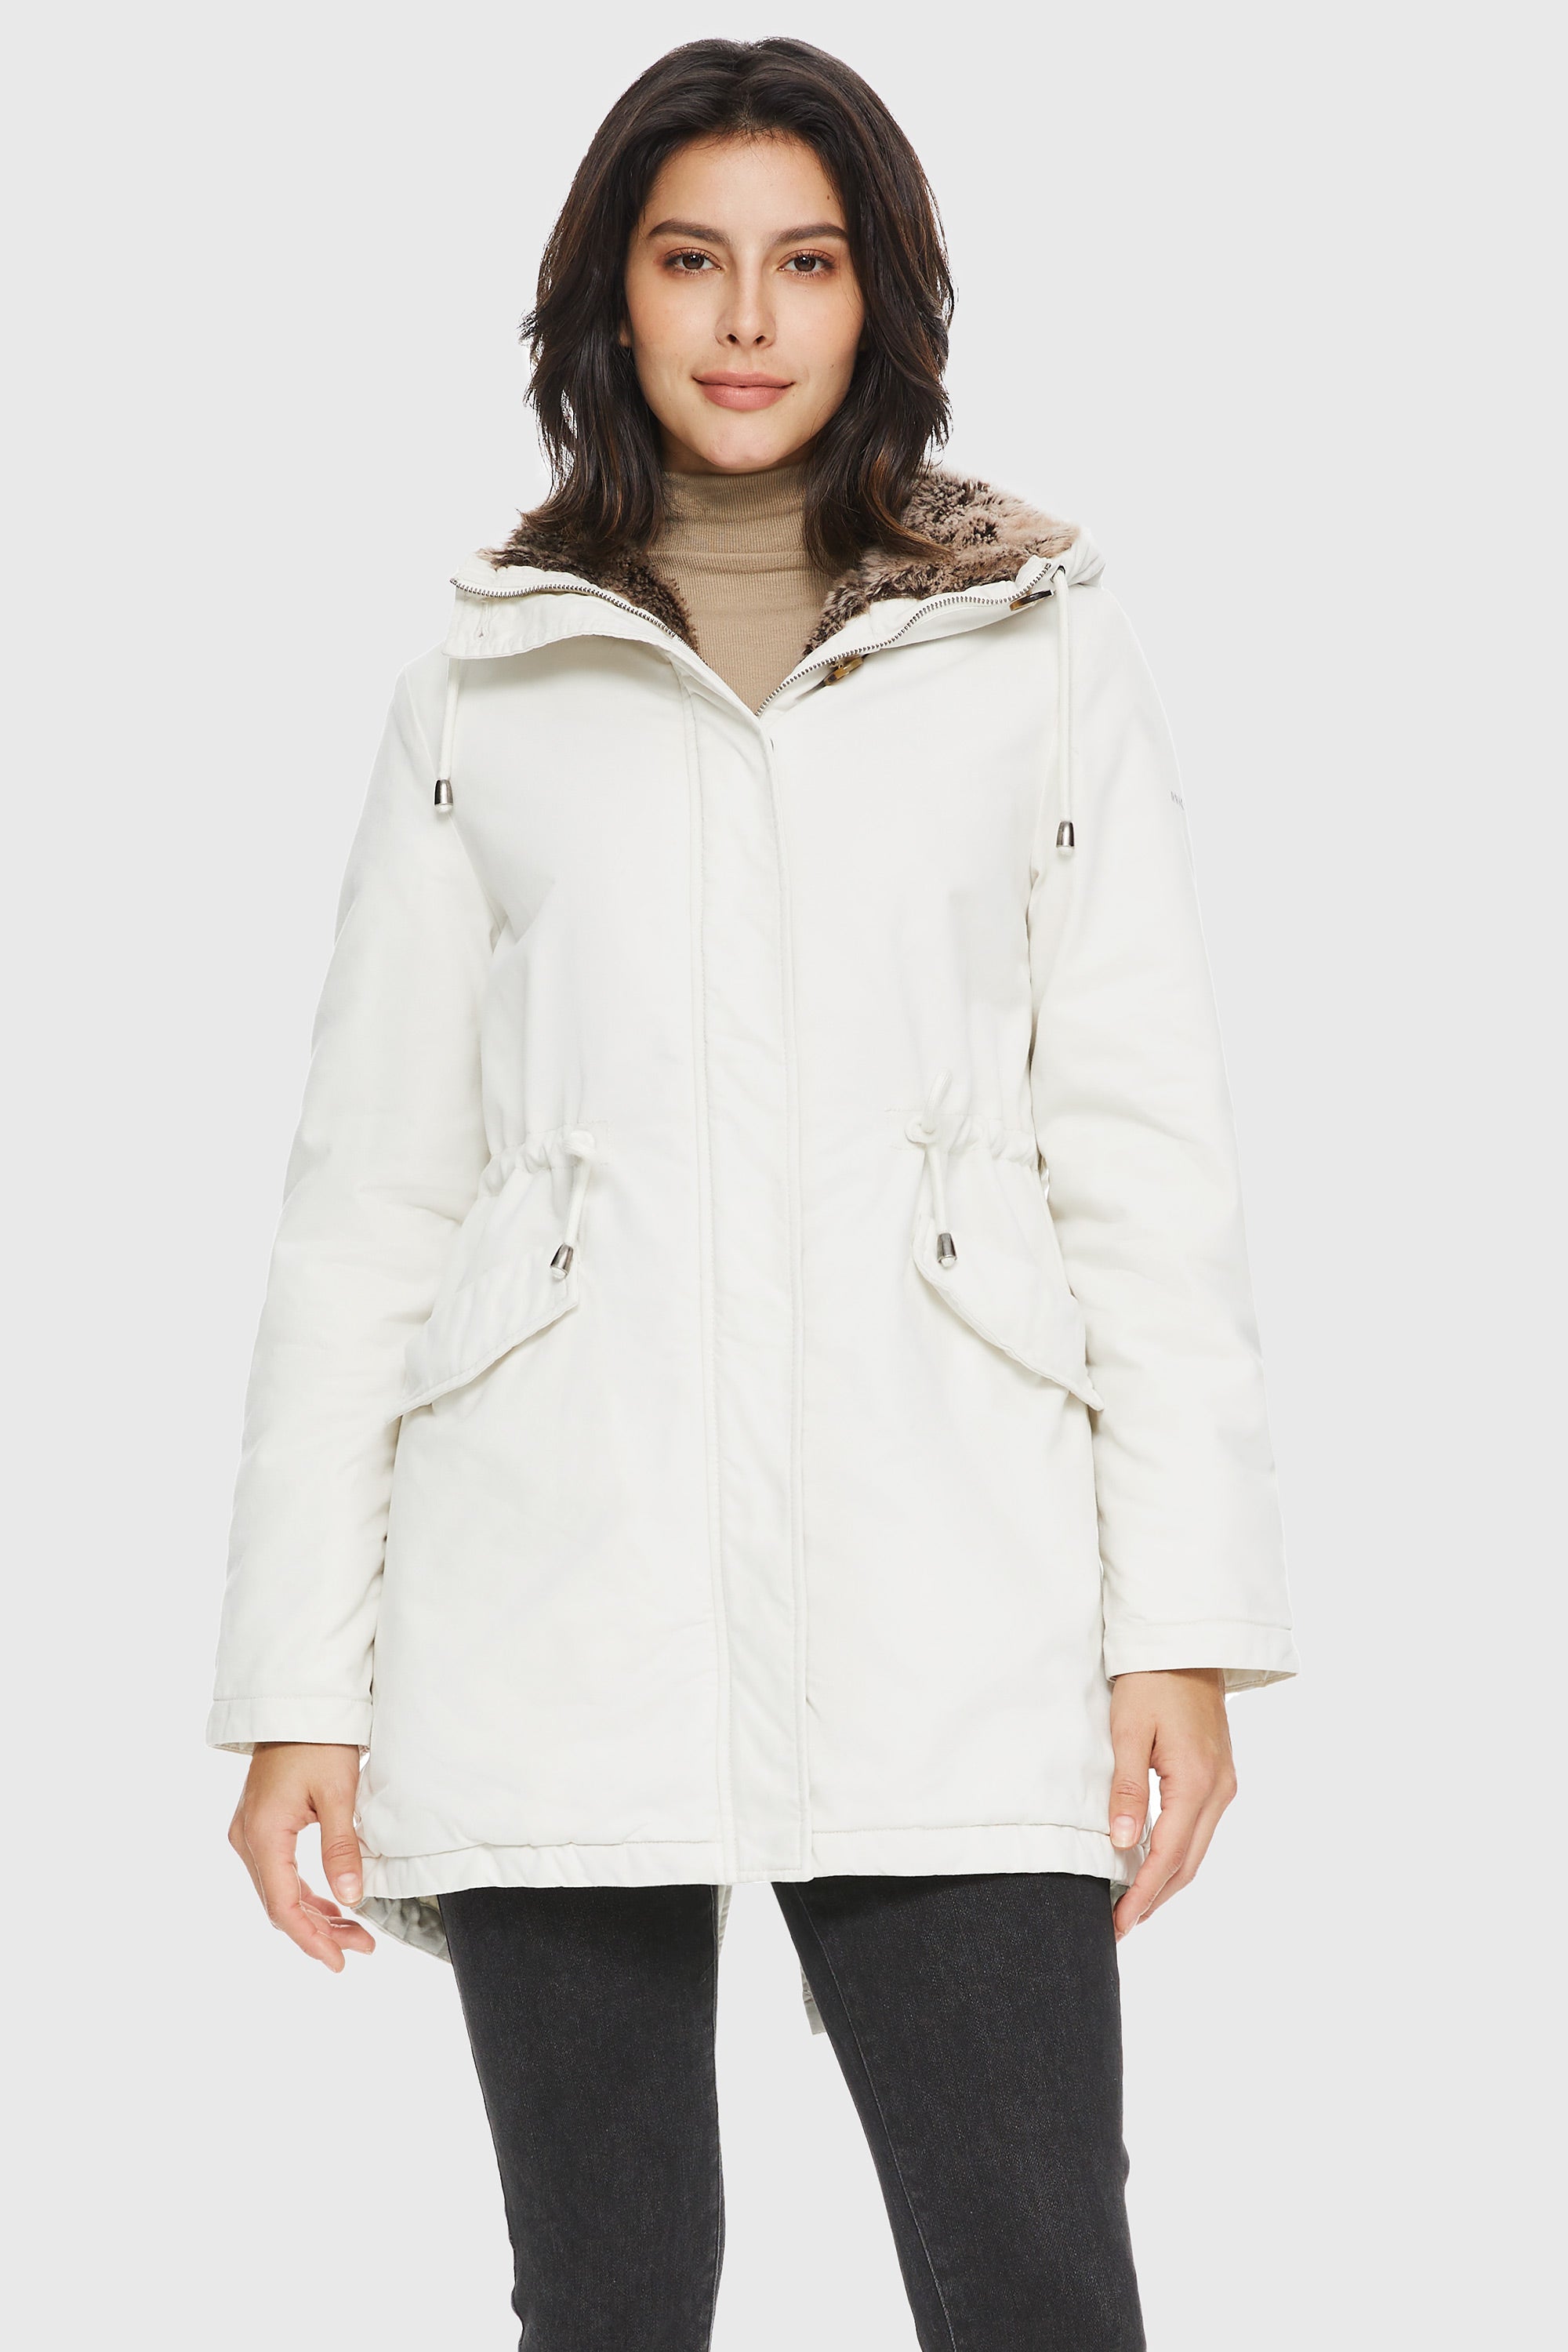  ELEZAY Women's Parka Jacket with Faux Fur Trim Hood Warm FLeece  Lined Stylish Winter Coats Mid Length Zipper Closure Armygreen, Small :  Clothing, Shoes & Jewelry